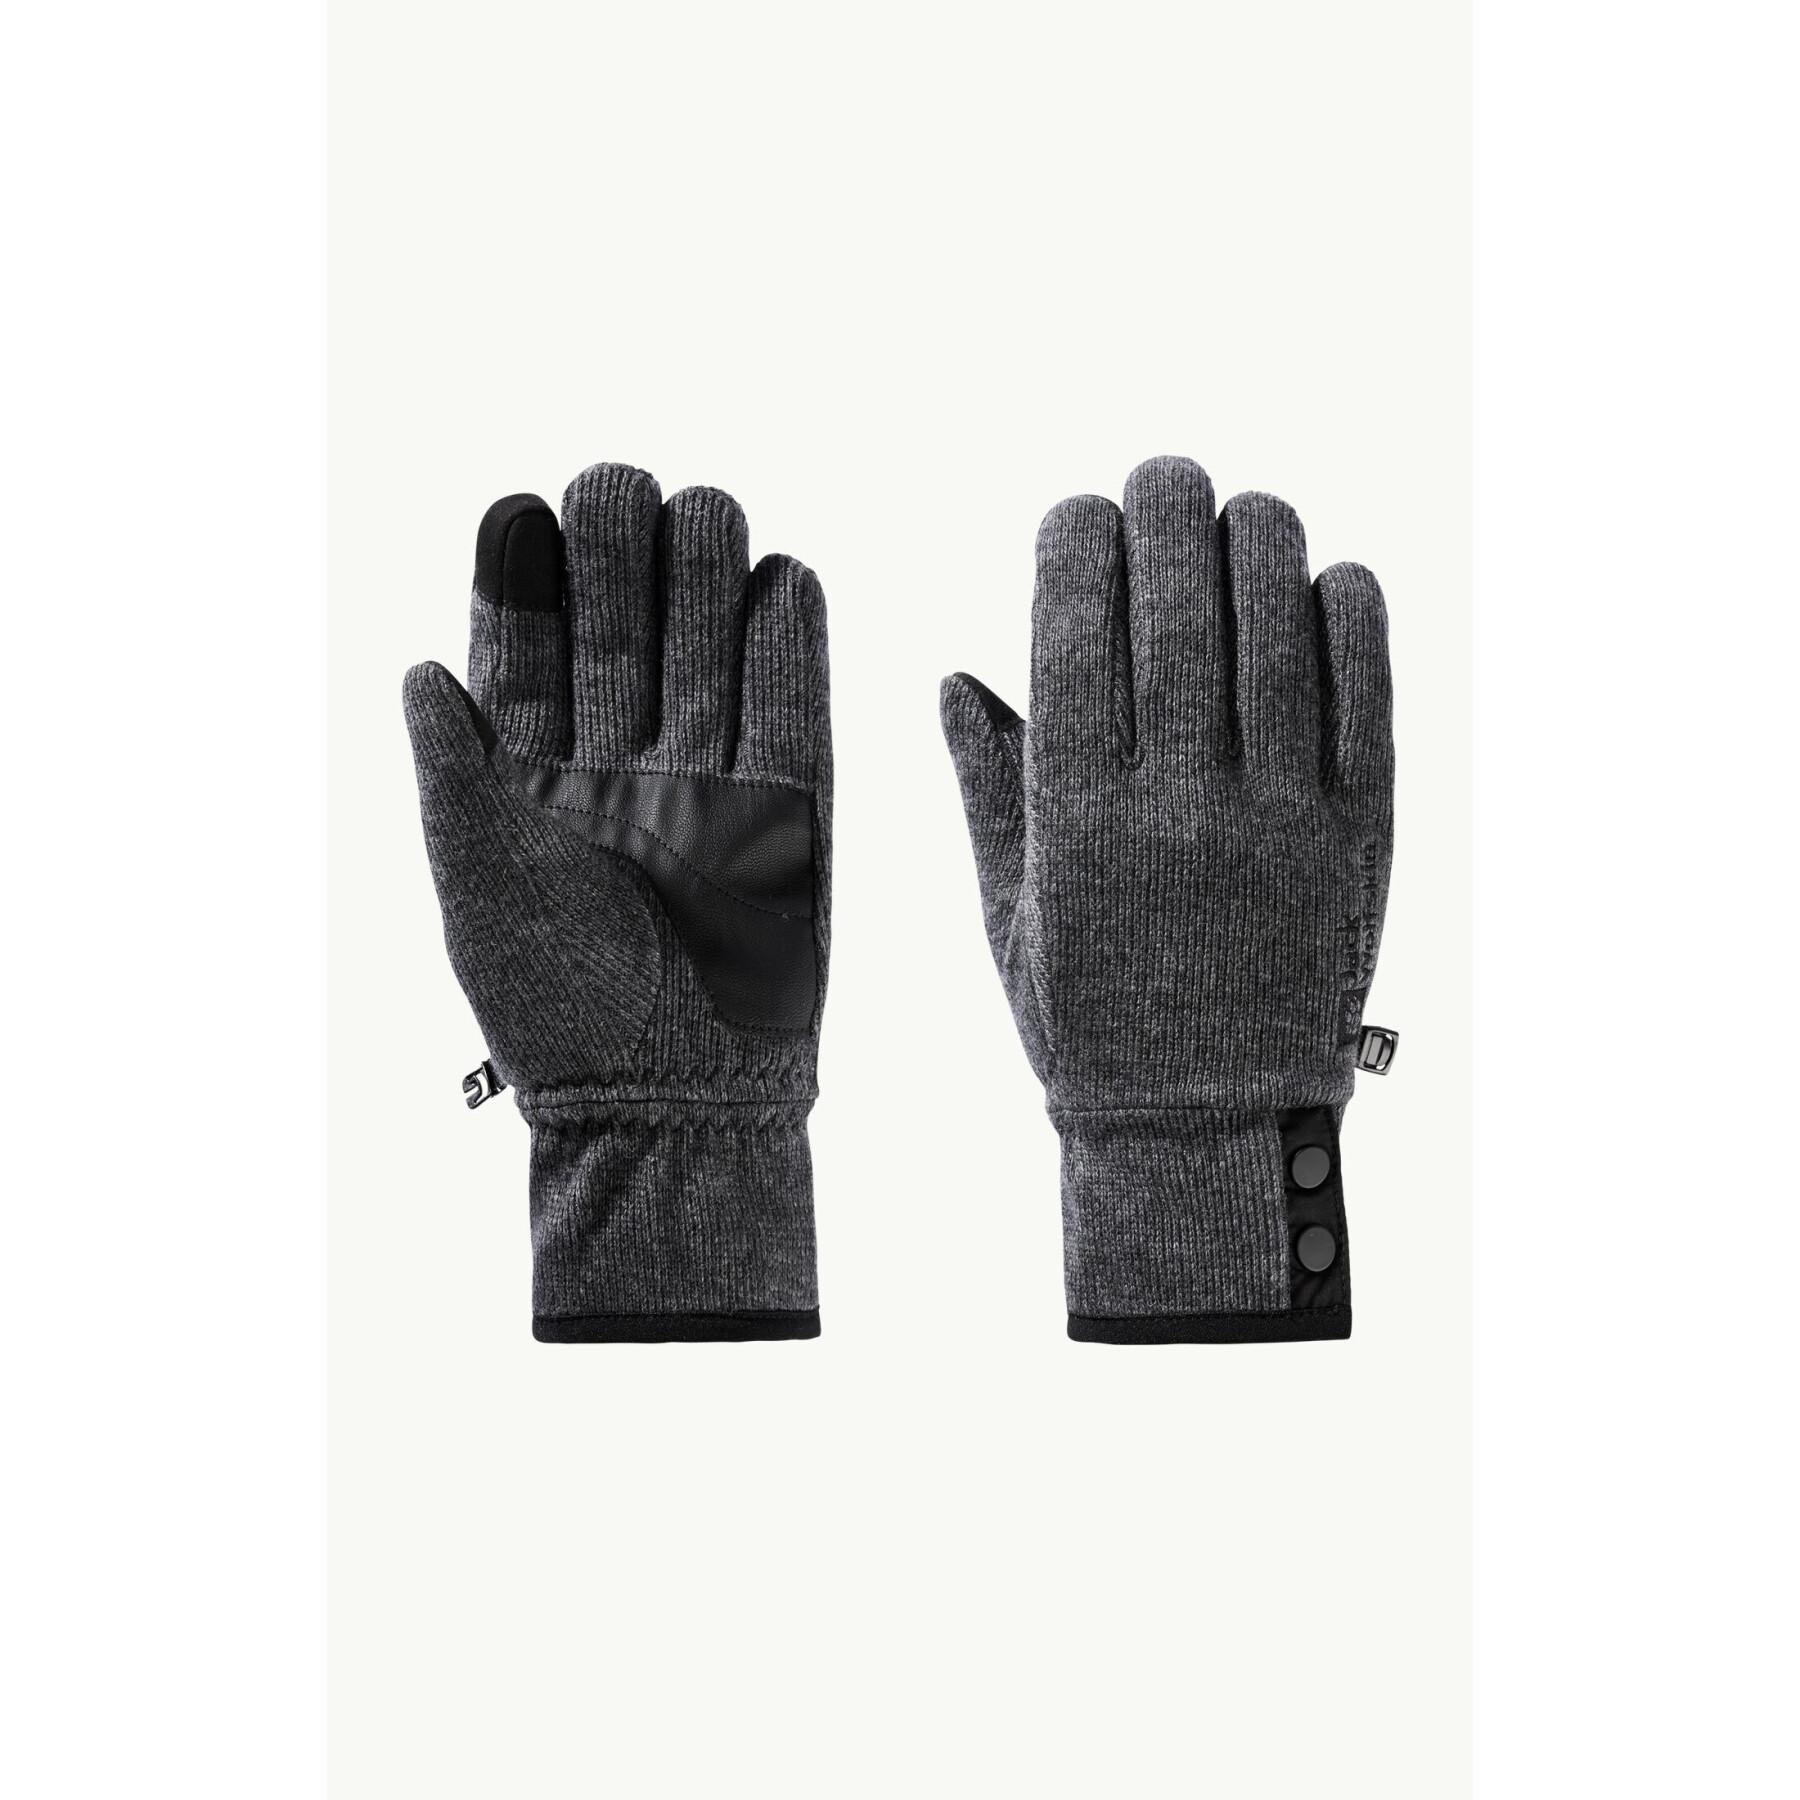 Wool winter gloves Jack Wolfskin - Fitness Accessories - Training - Fitness